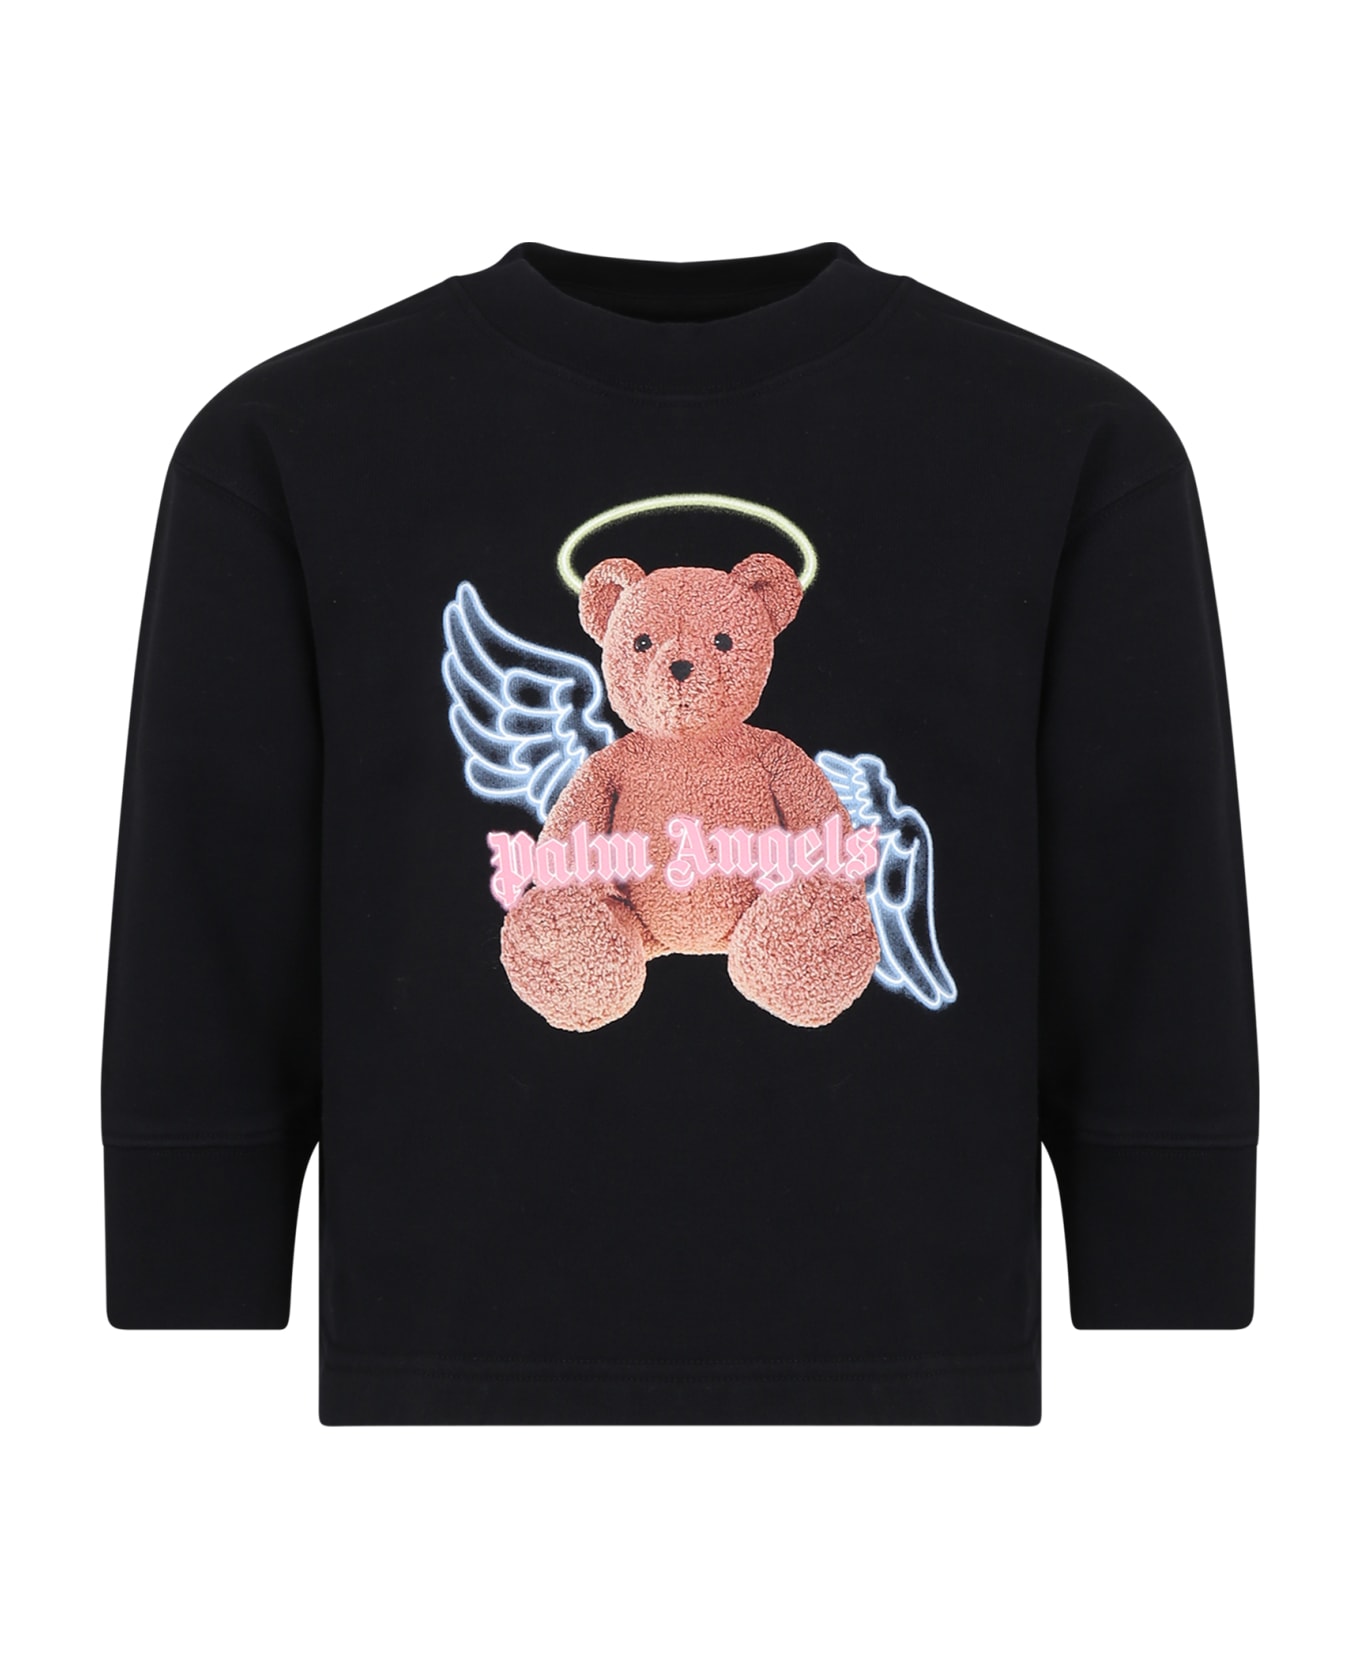 Palm Angels Black Sweatshirt For Girl With Bear - BLACK/BROWN